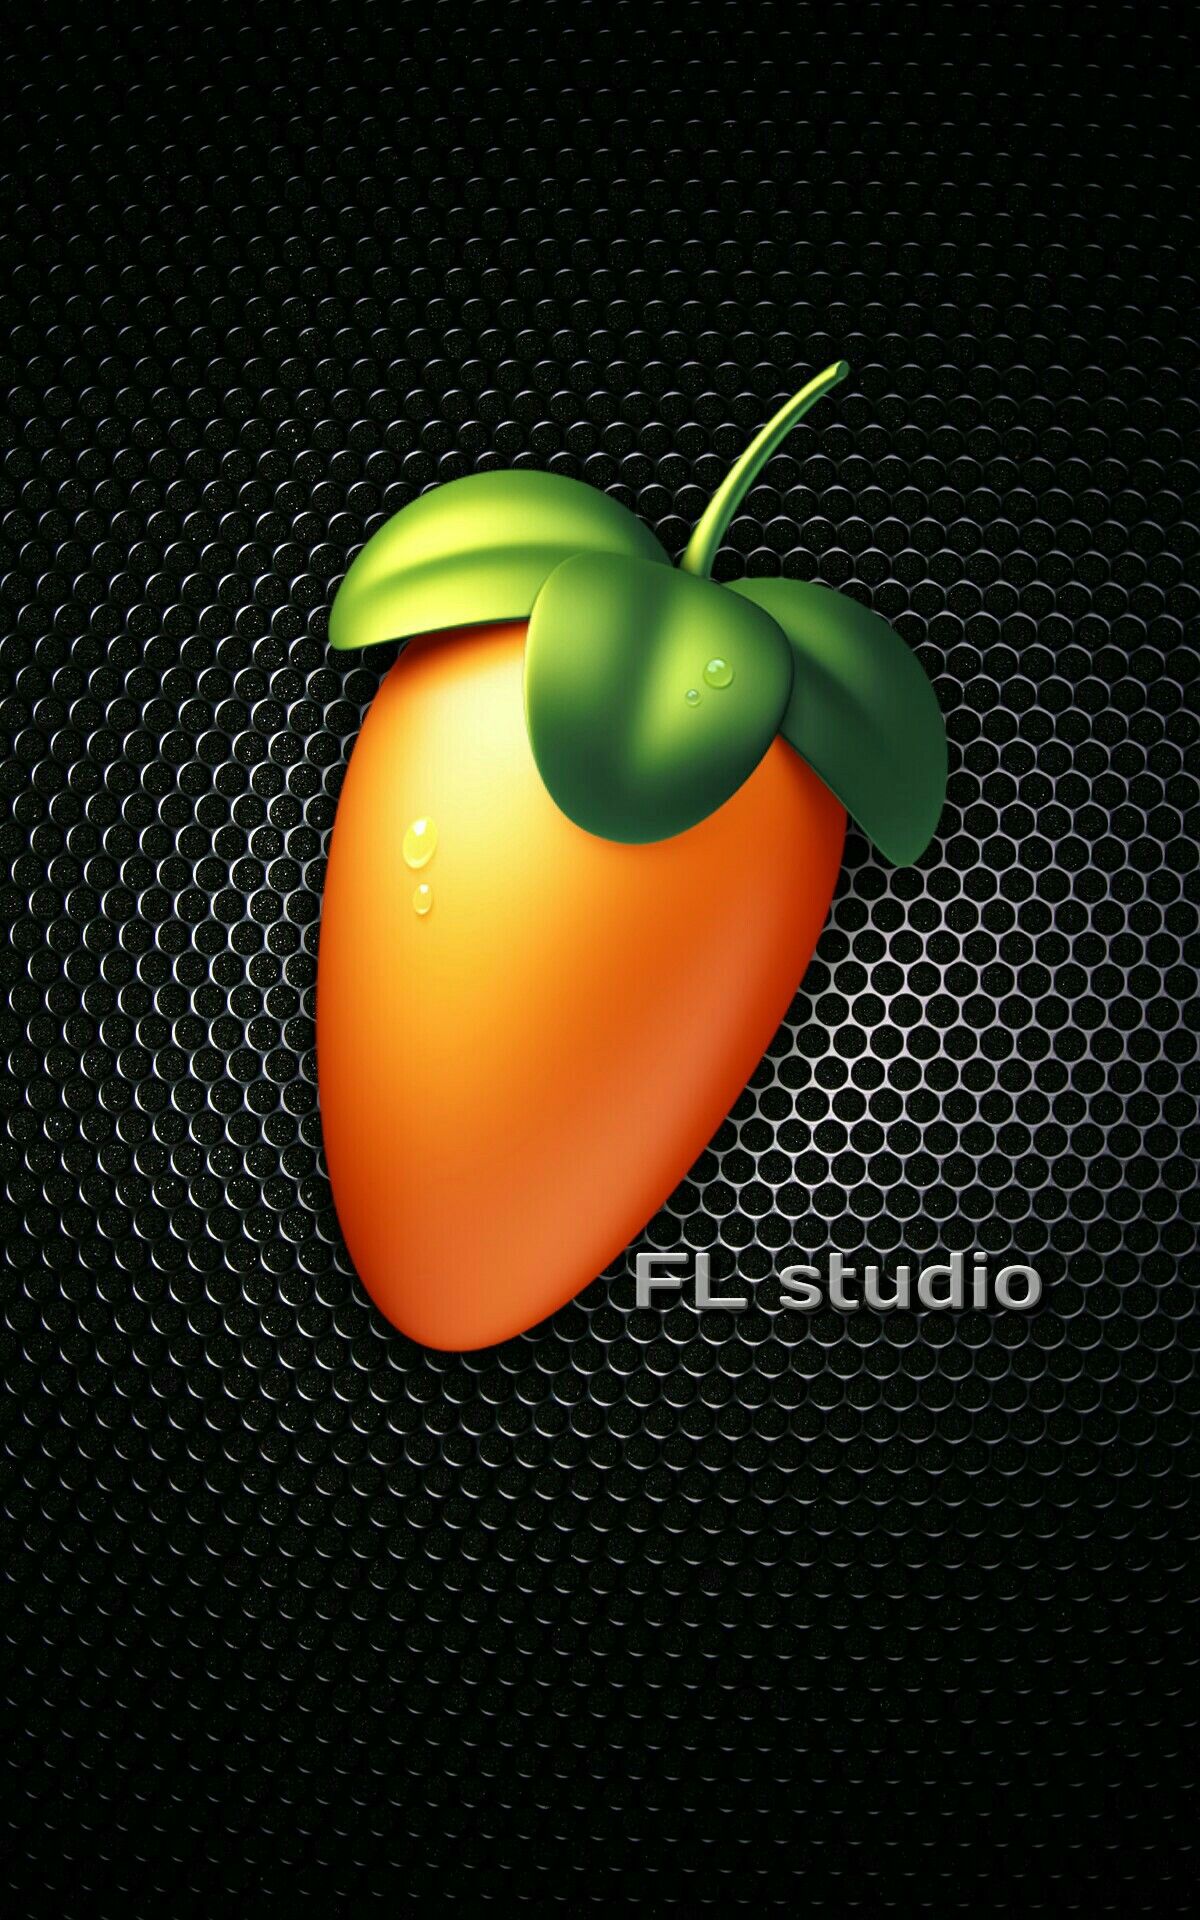 nexus plugin for fl studio 20 download